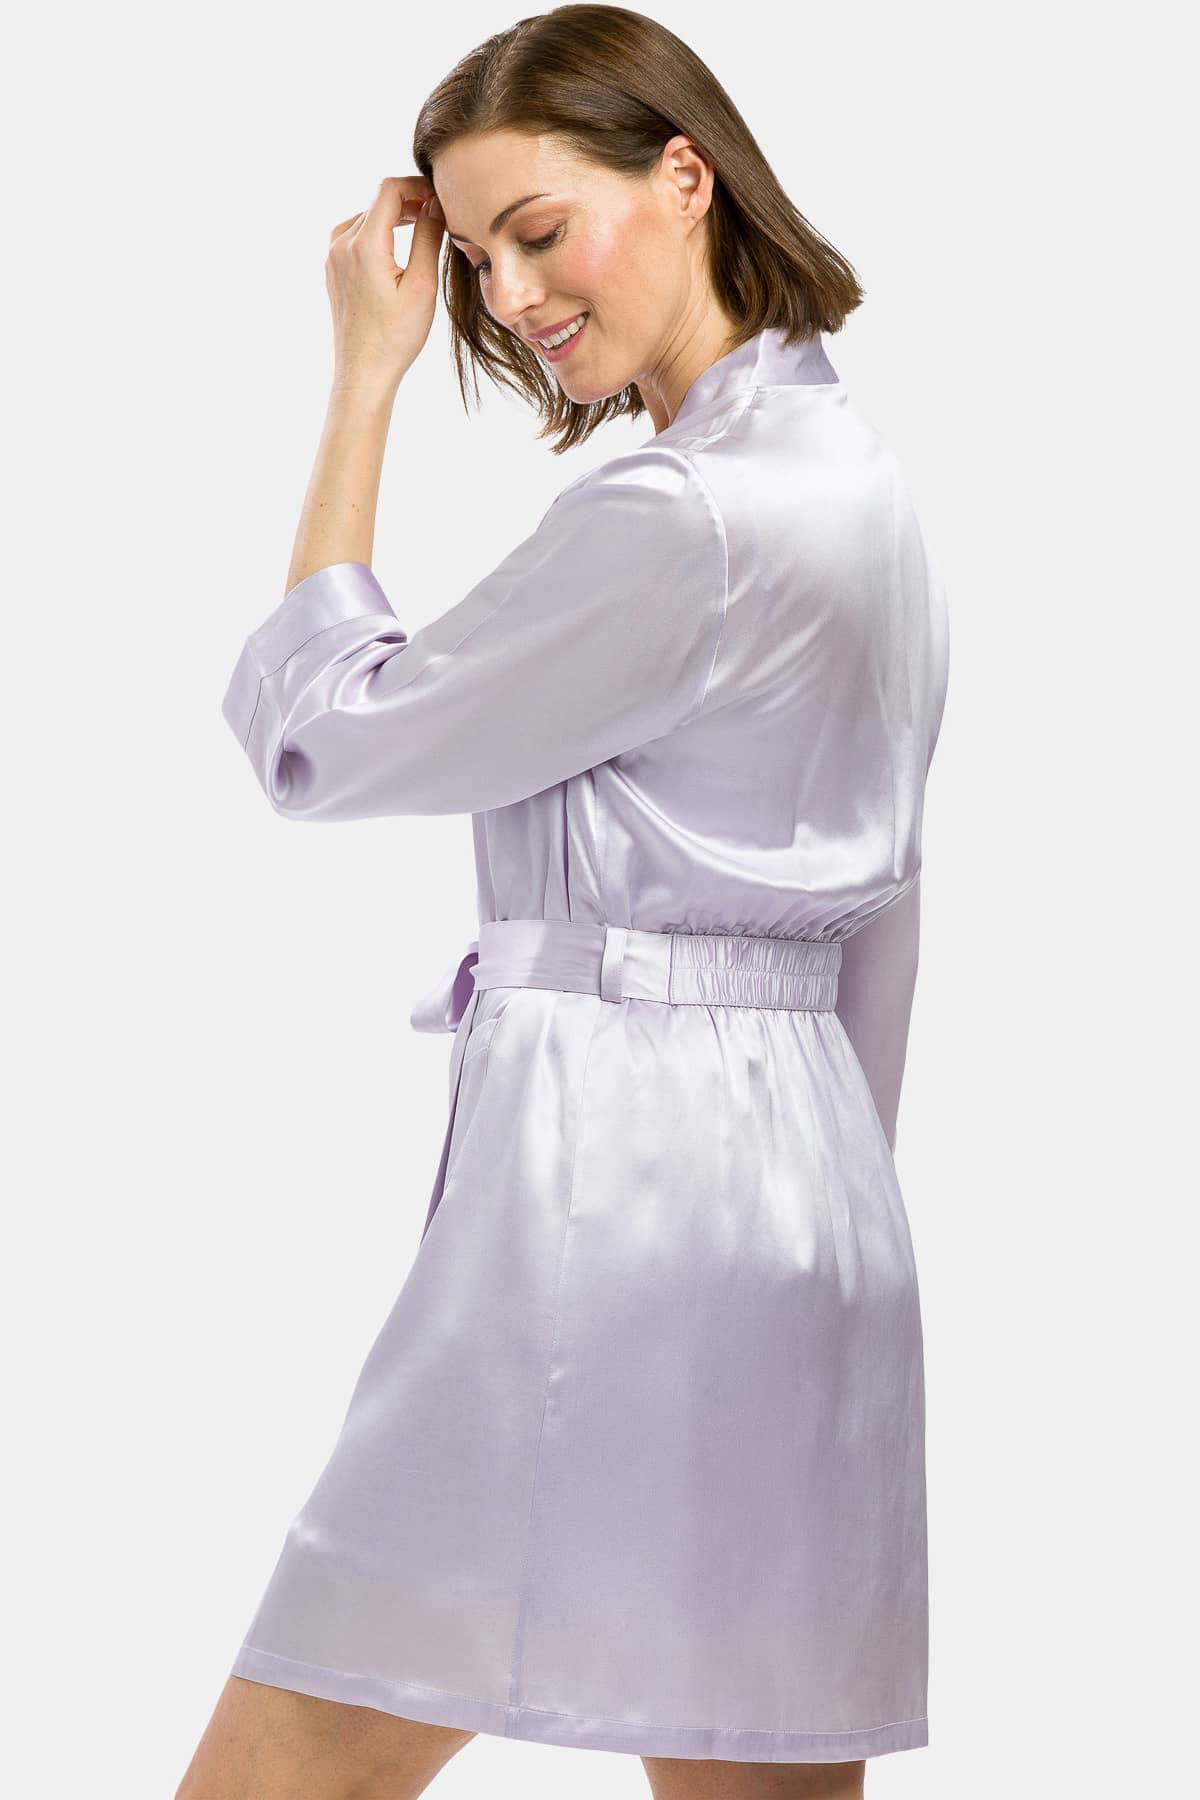 Sunshinemall Women's Plus Size Satin Kimono Robes Short Silk India | Ubuy